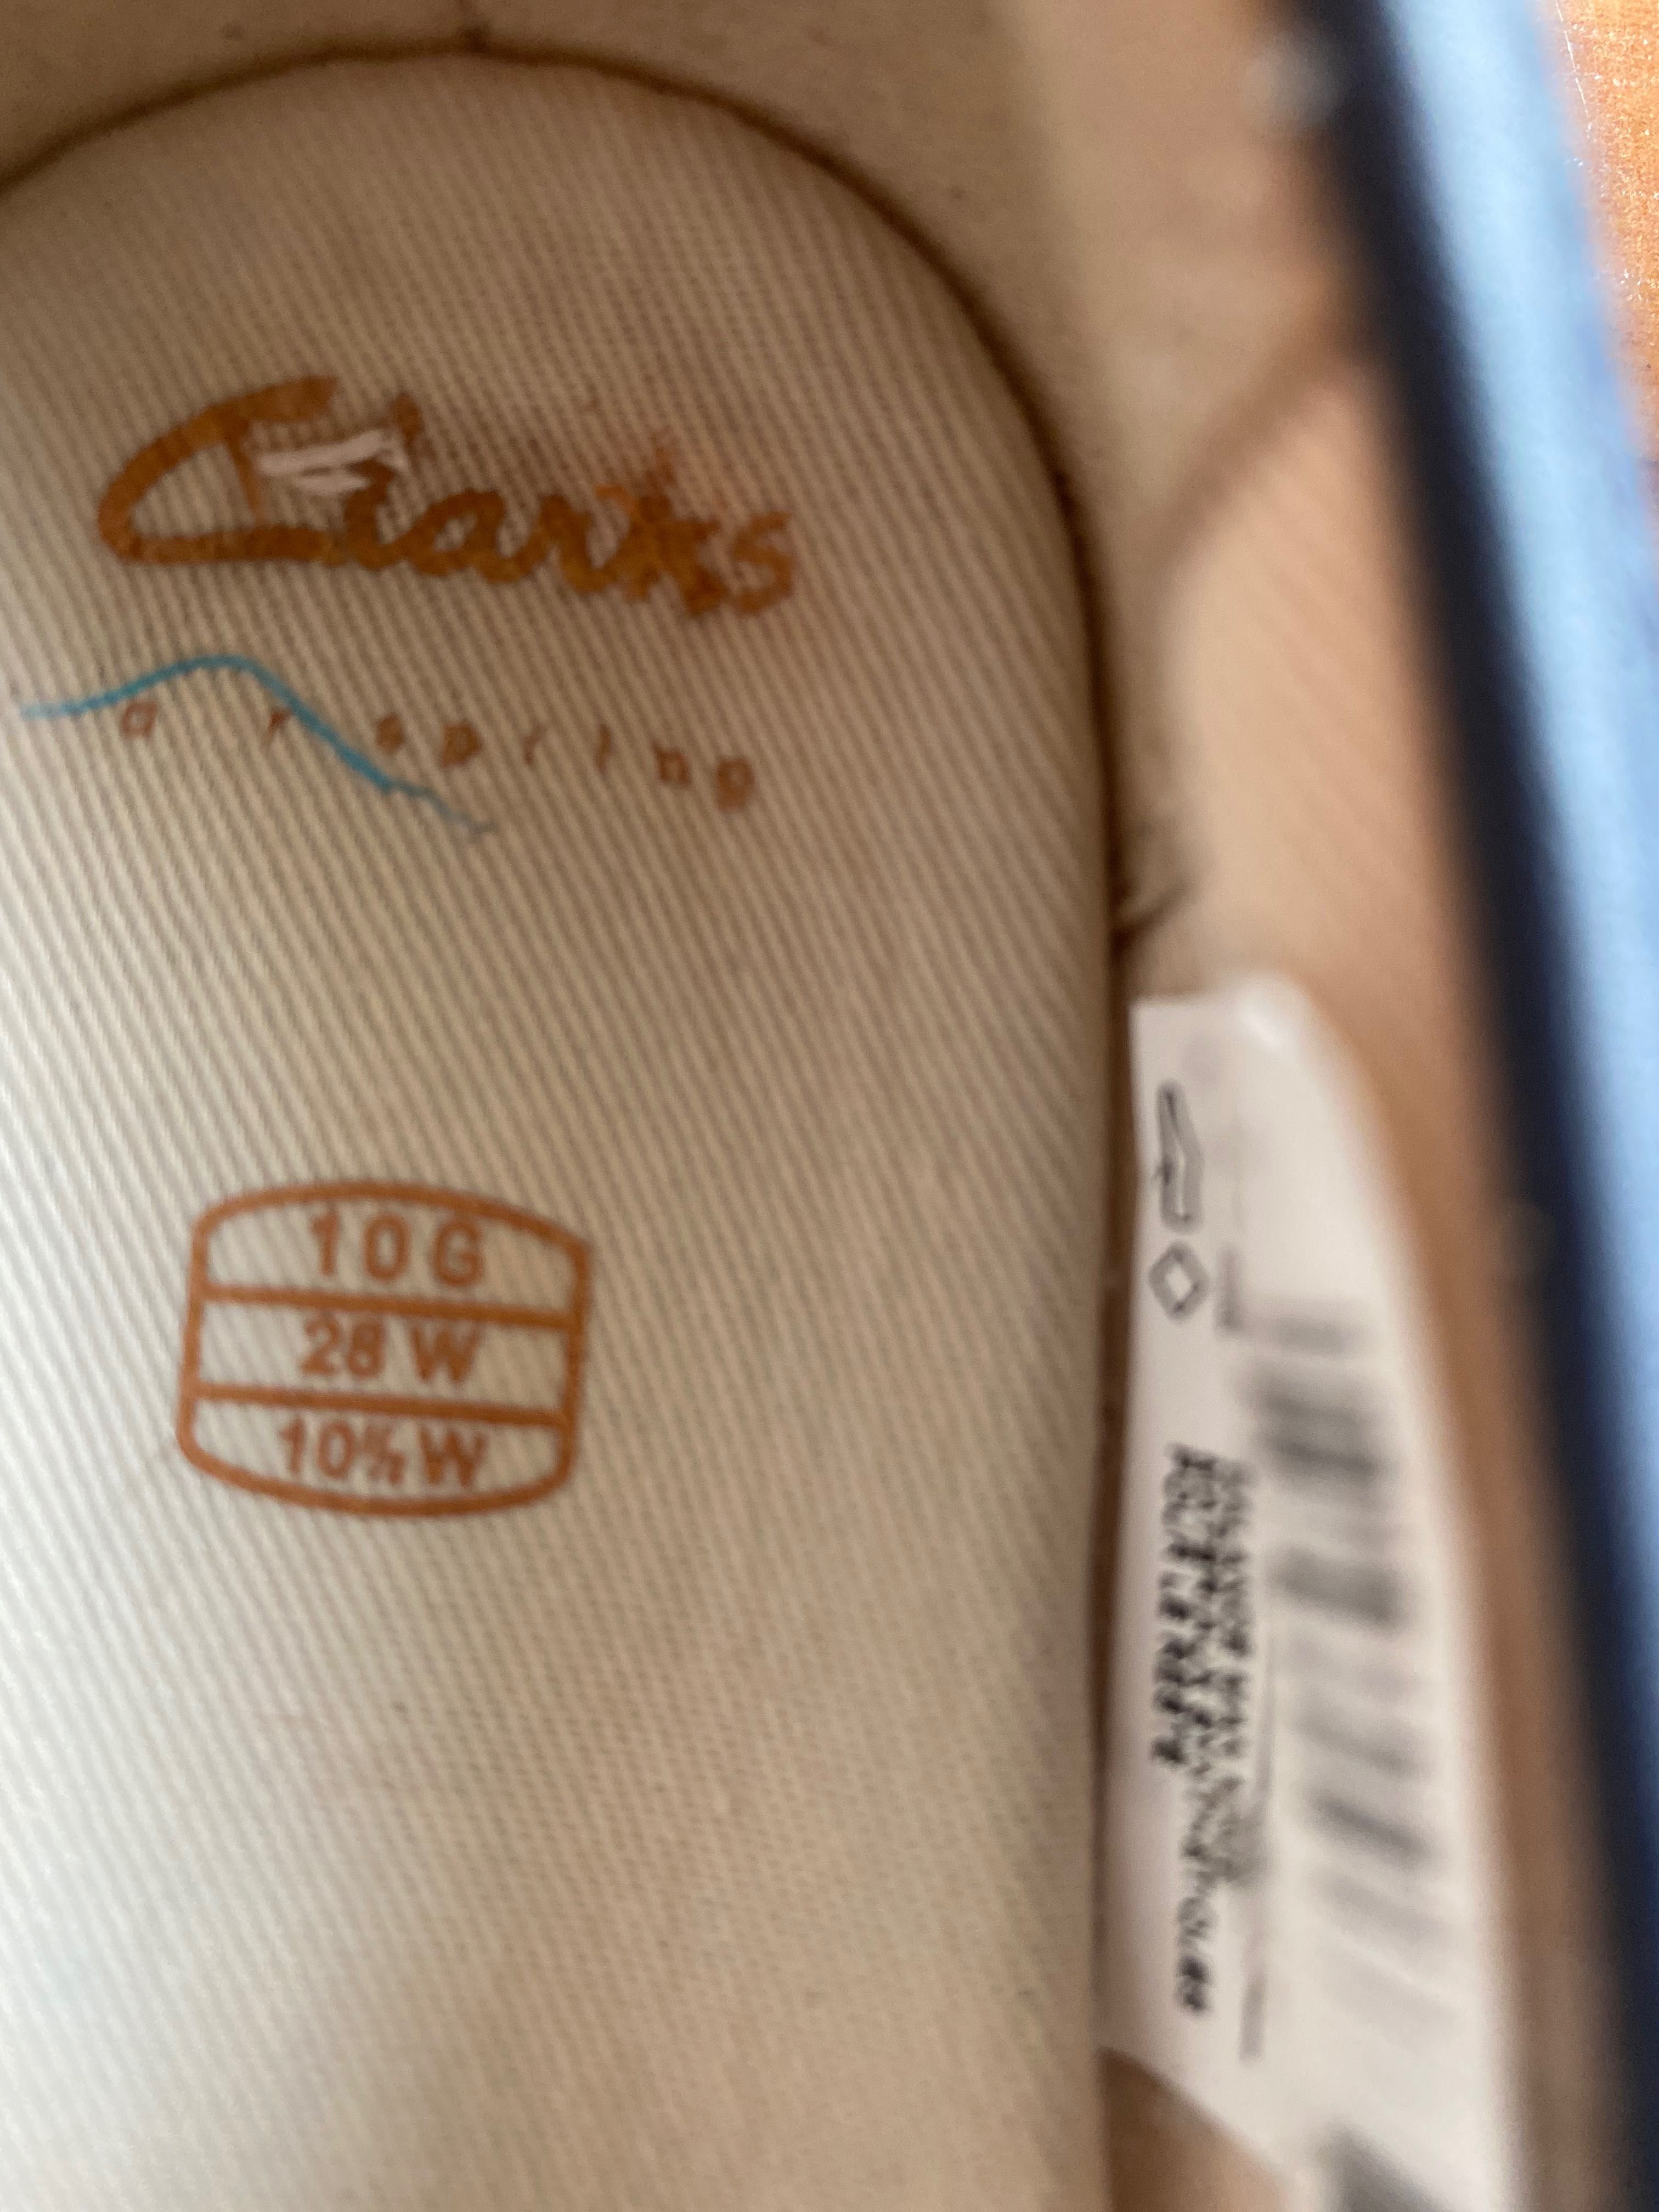 Pantofi fetite Clarks marime 28 ( 10 Uk) inchidere arici